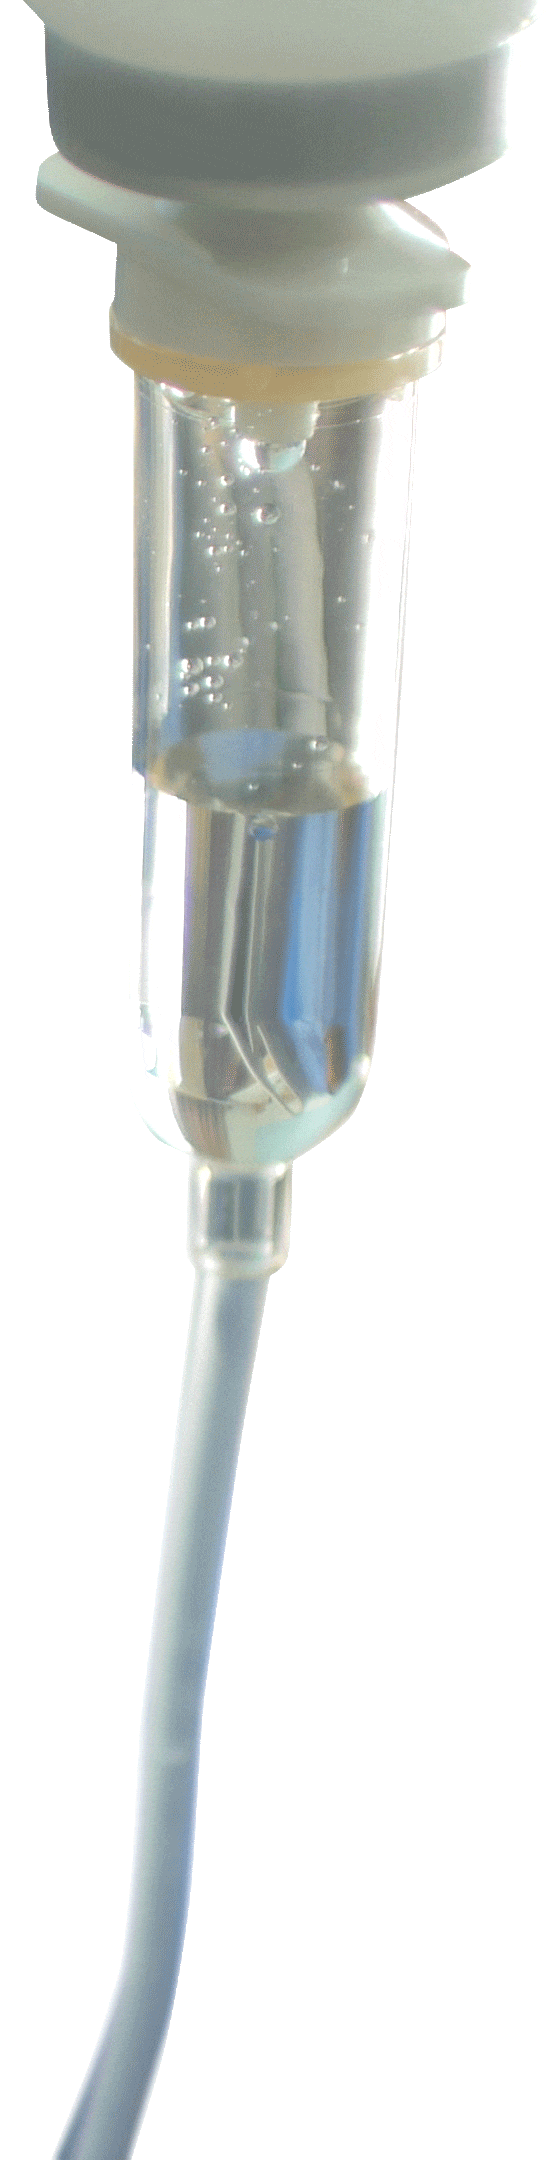 Intravenous drip equipment